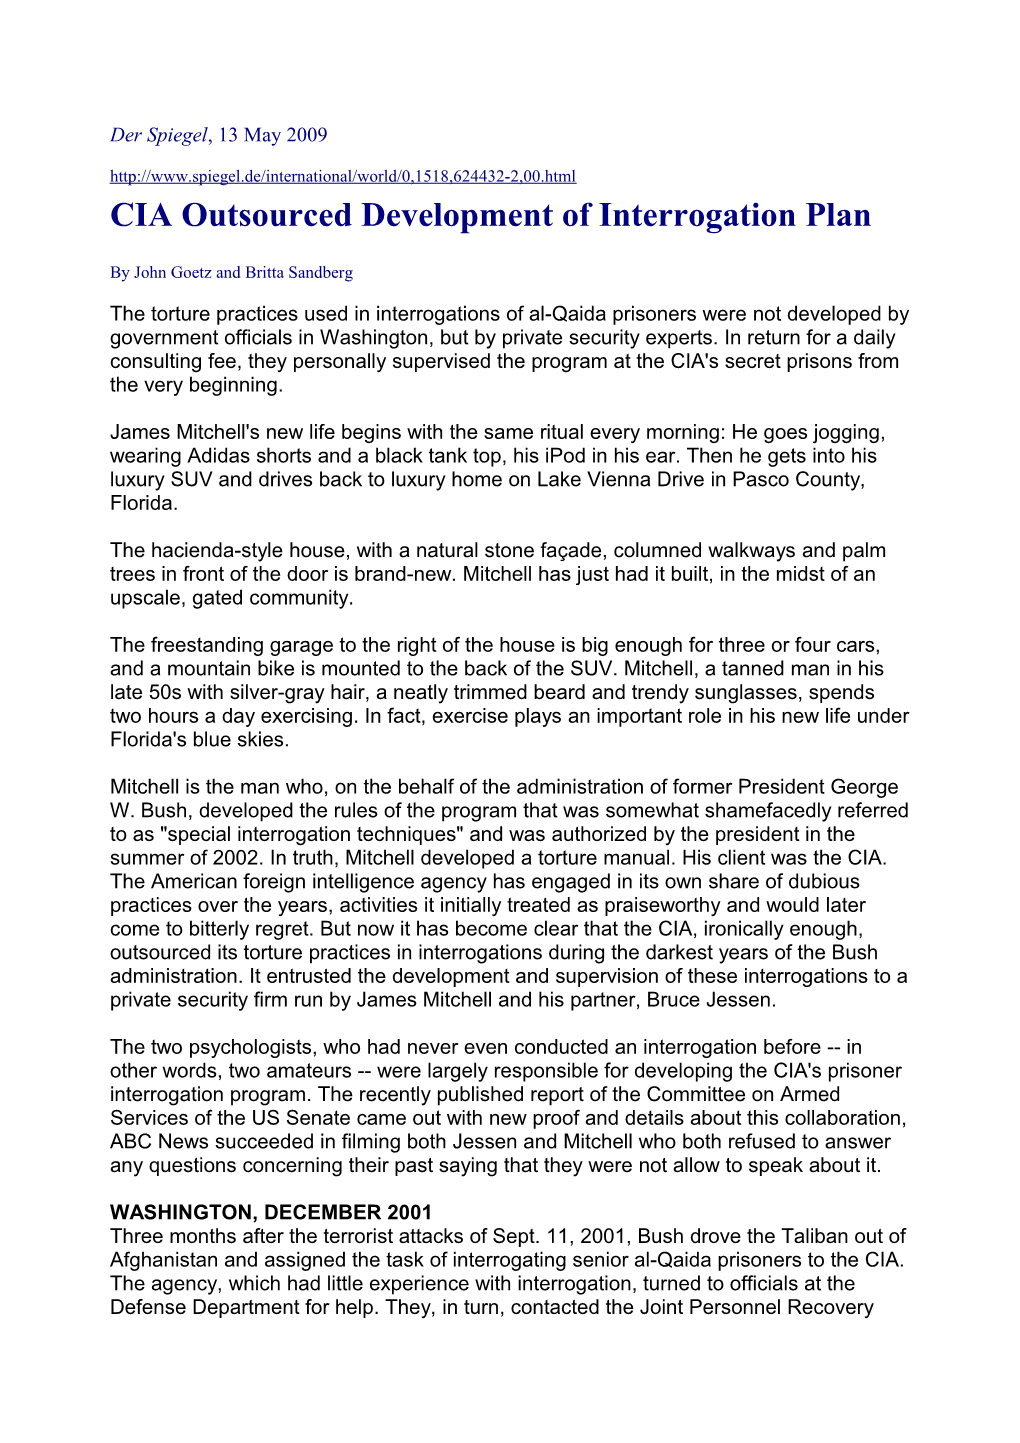 CIA Outsourced Development of Interrogation Plan